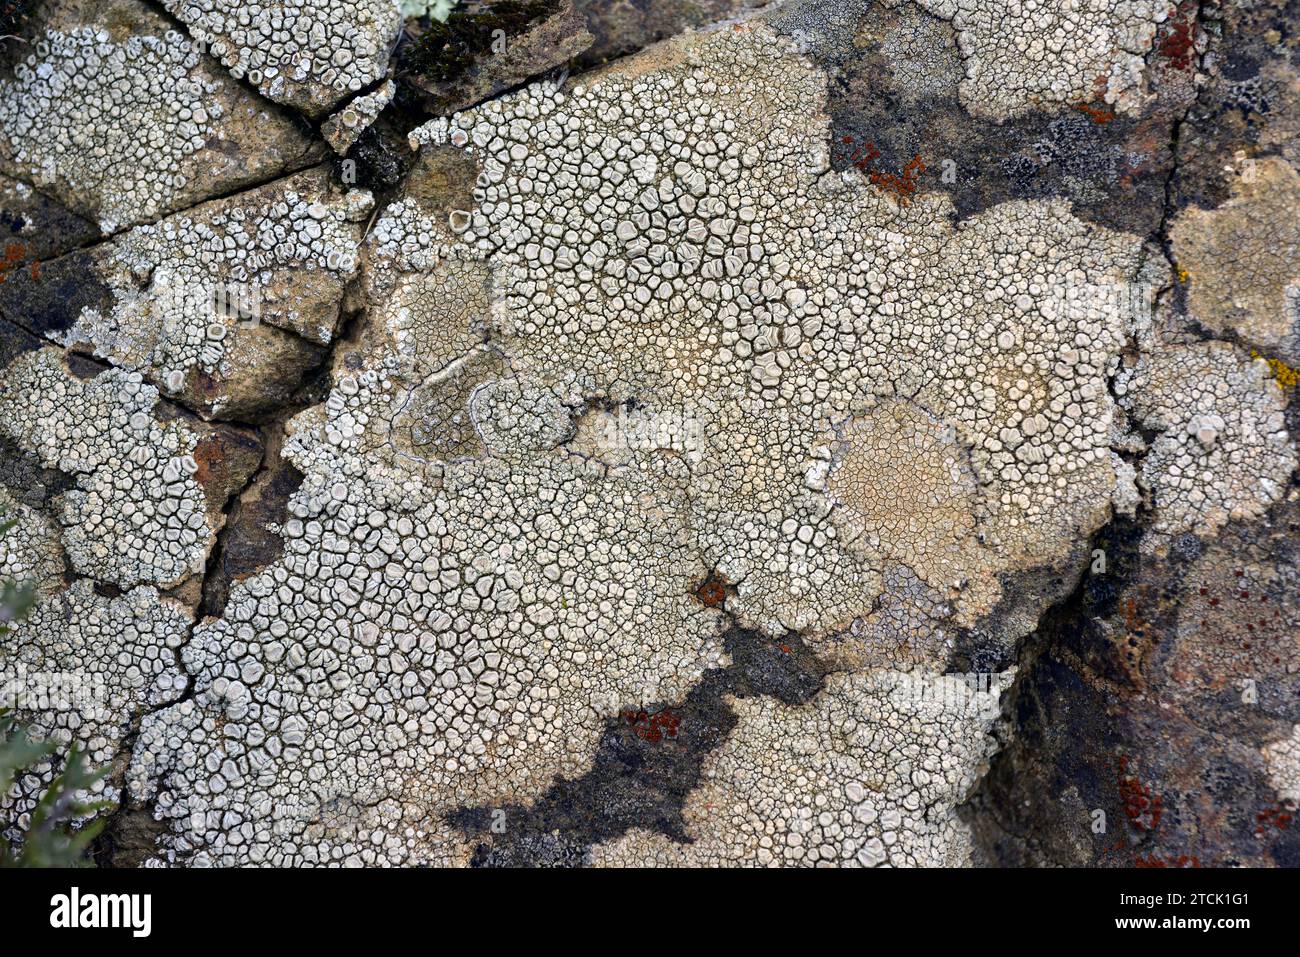 Ochrolechia parella and red apothecia of parasitic lichen Caloplaca insularis. This photo was taken in La Albera, Girona province, Catalonia, Spain. Stock Photo